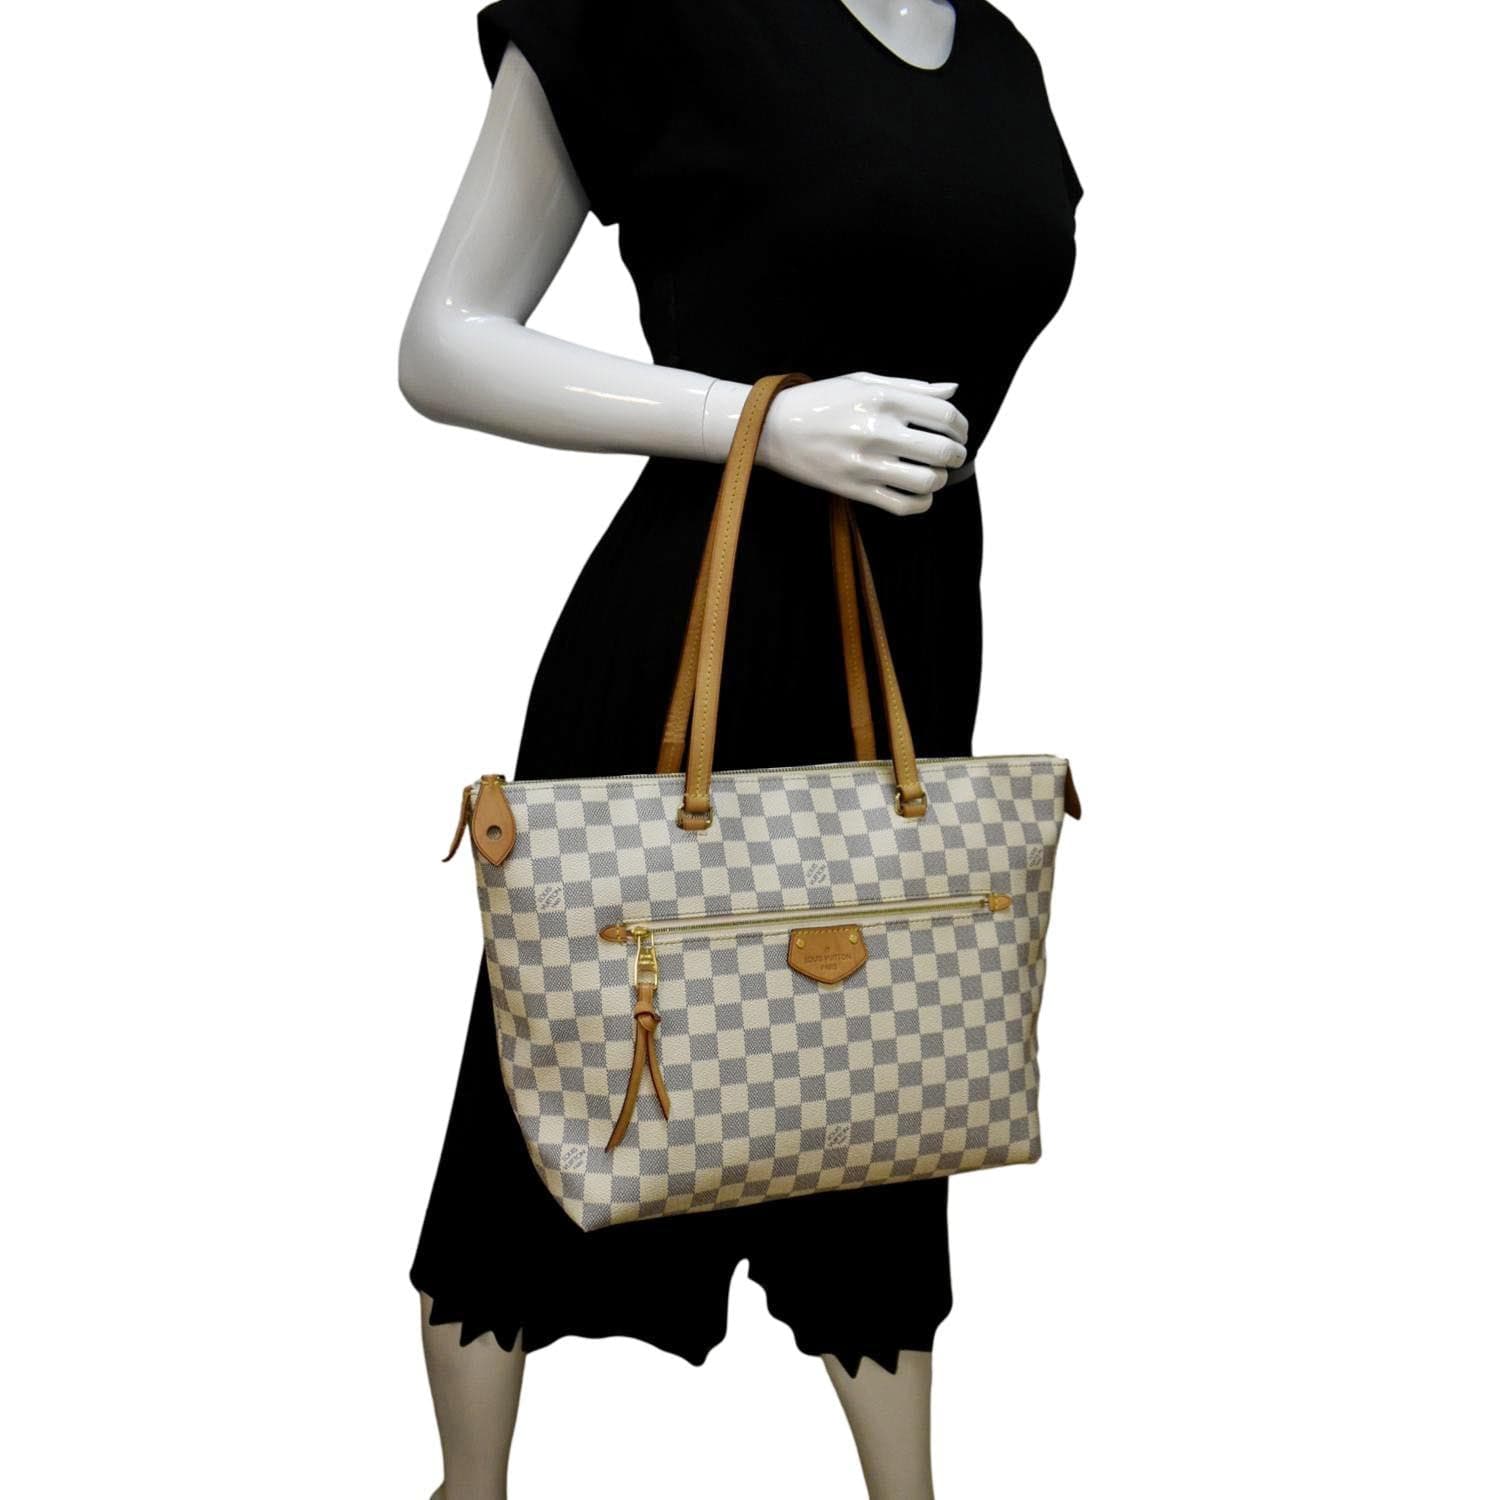 Iena MM Damier Azur – Keeks Designer Handbags